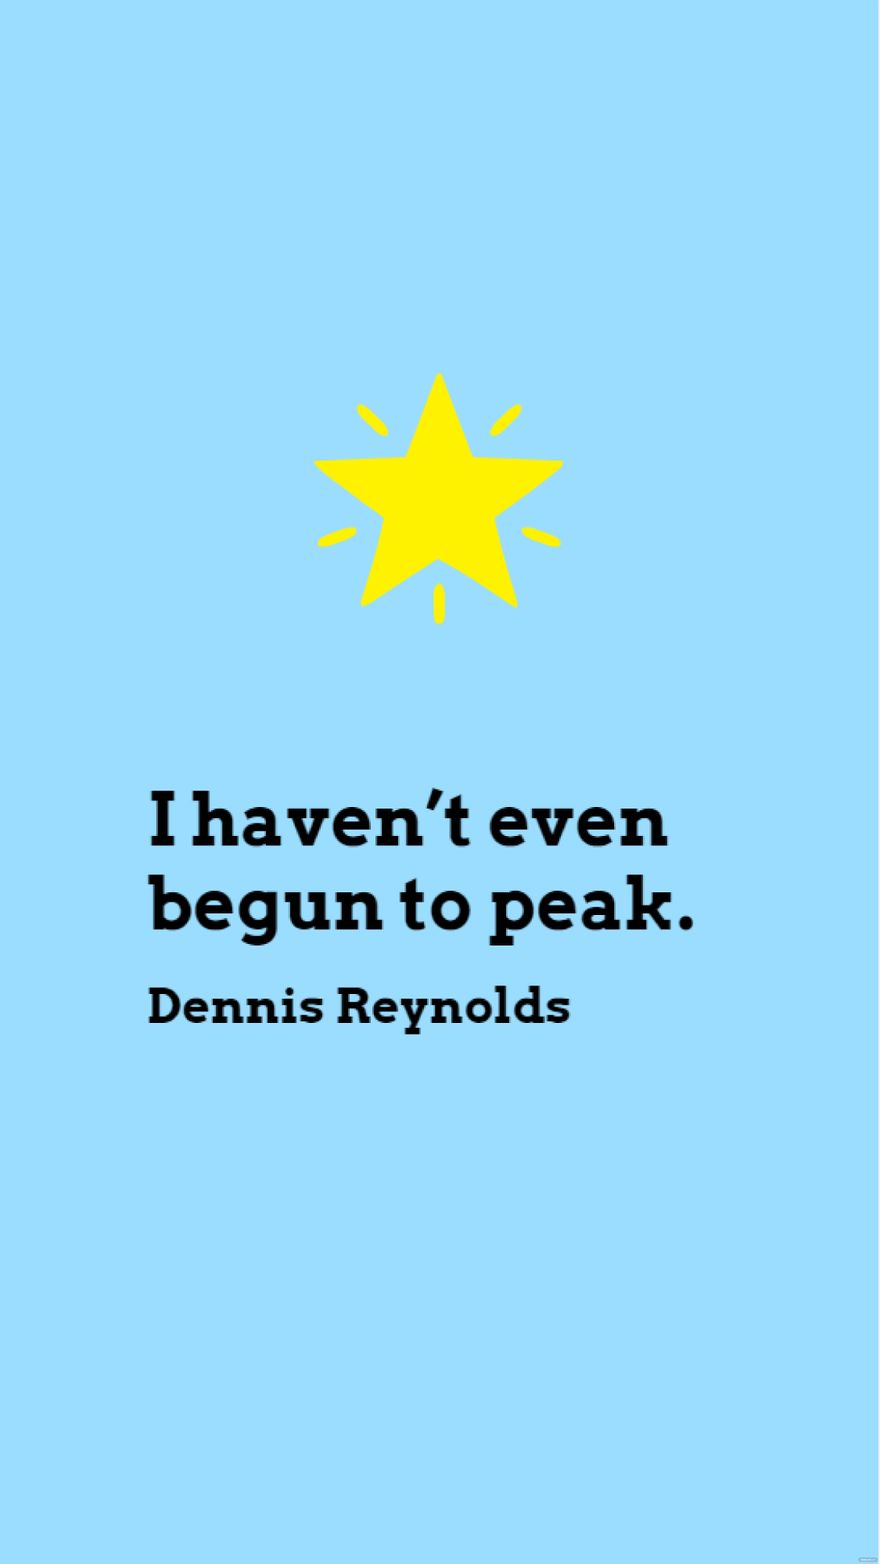 Dennis Reynolds - I haven’t even begun to peak.